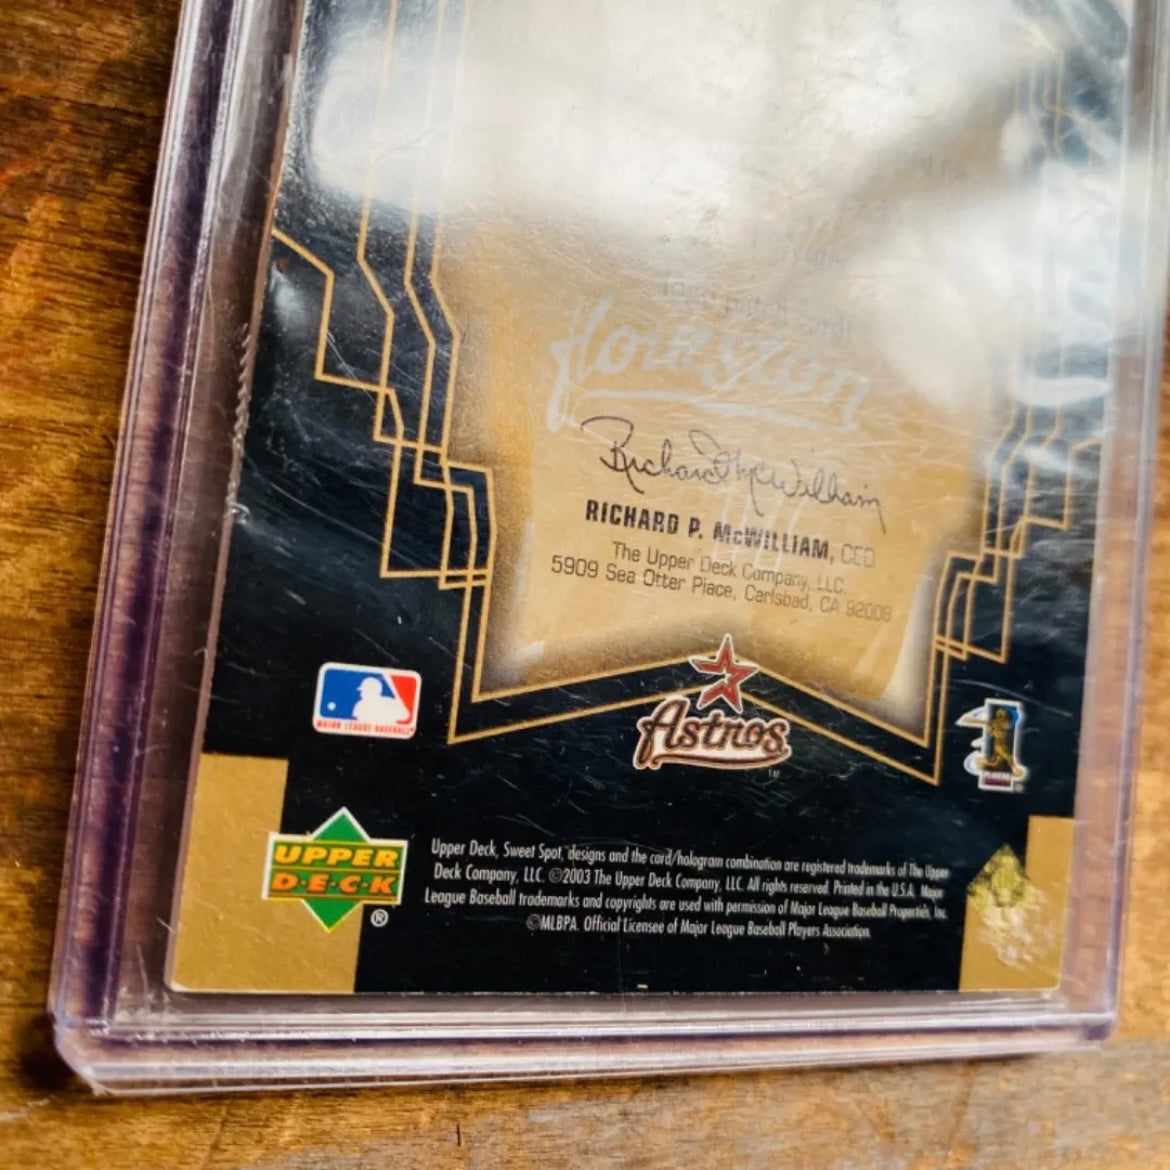 SWEET SPOT PATCHES MLB 記念ワッペン カード 17